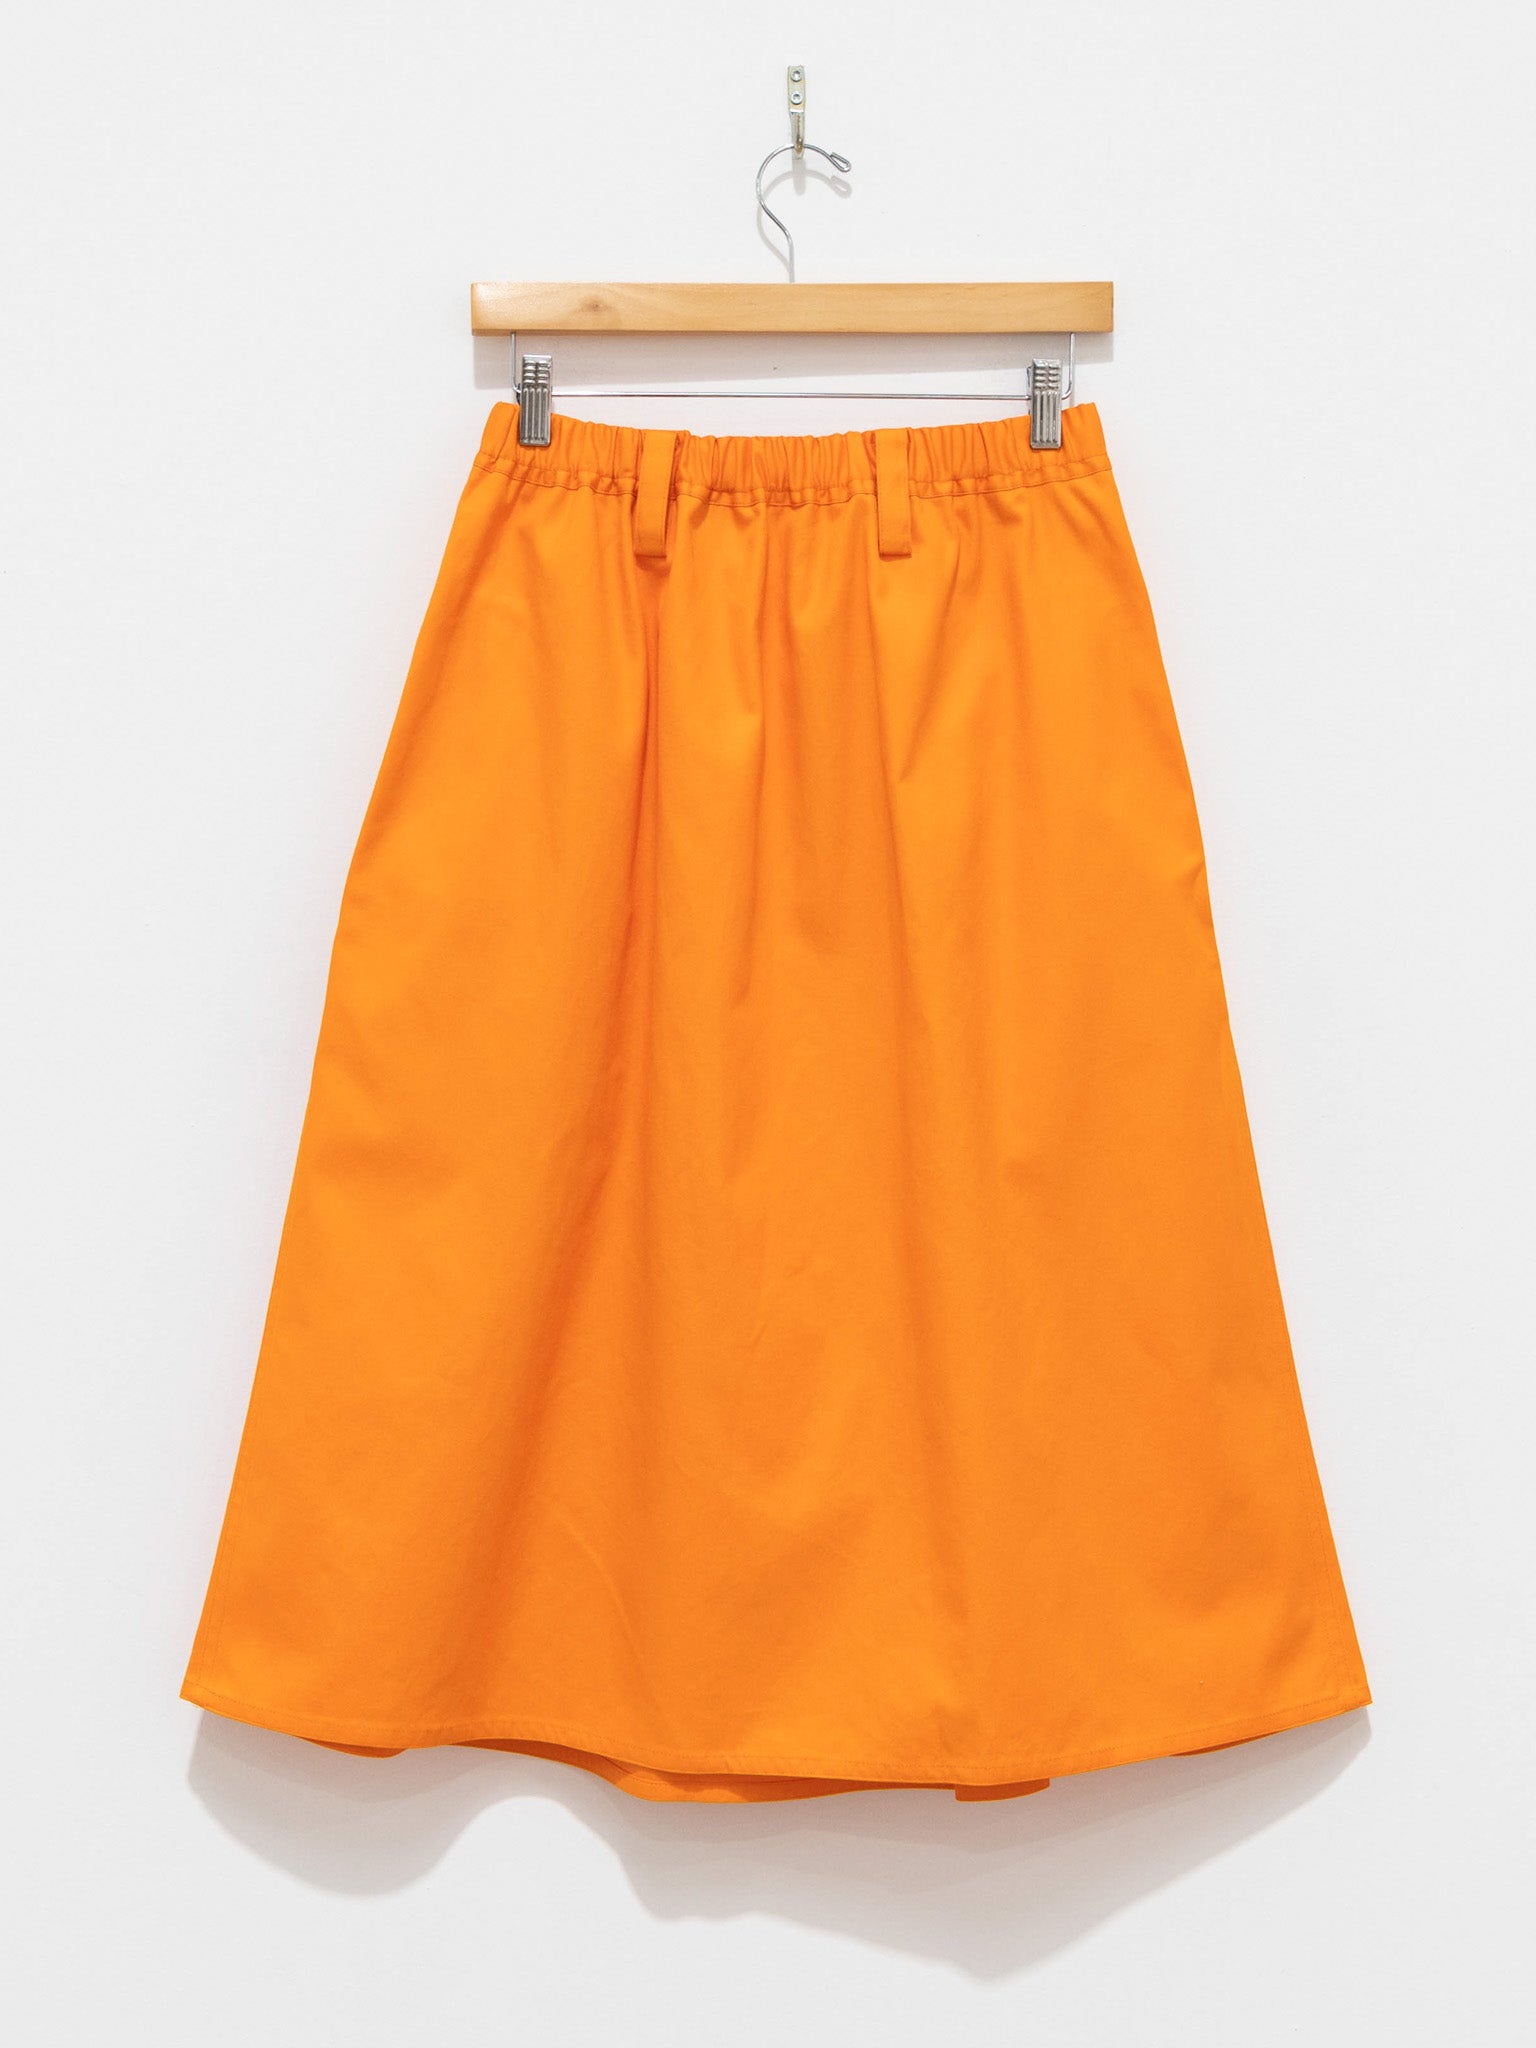 Namu Shop - Sofie D'Hoore Selena Poplin Cotton Skirt - Orange